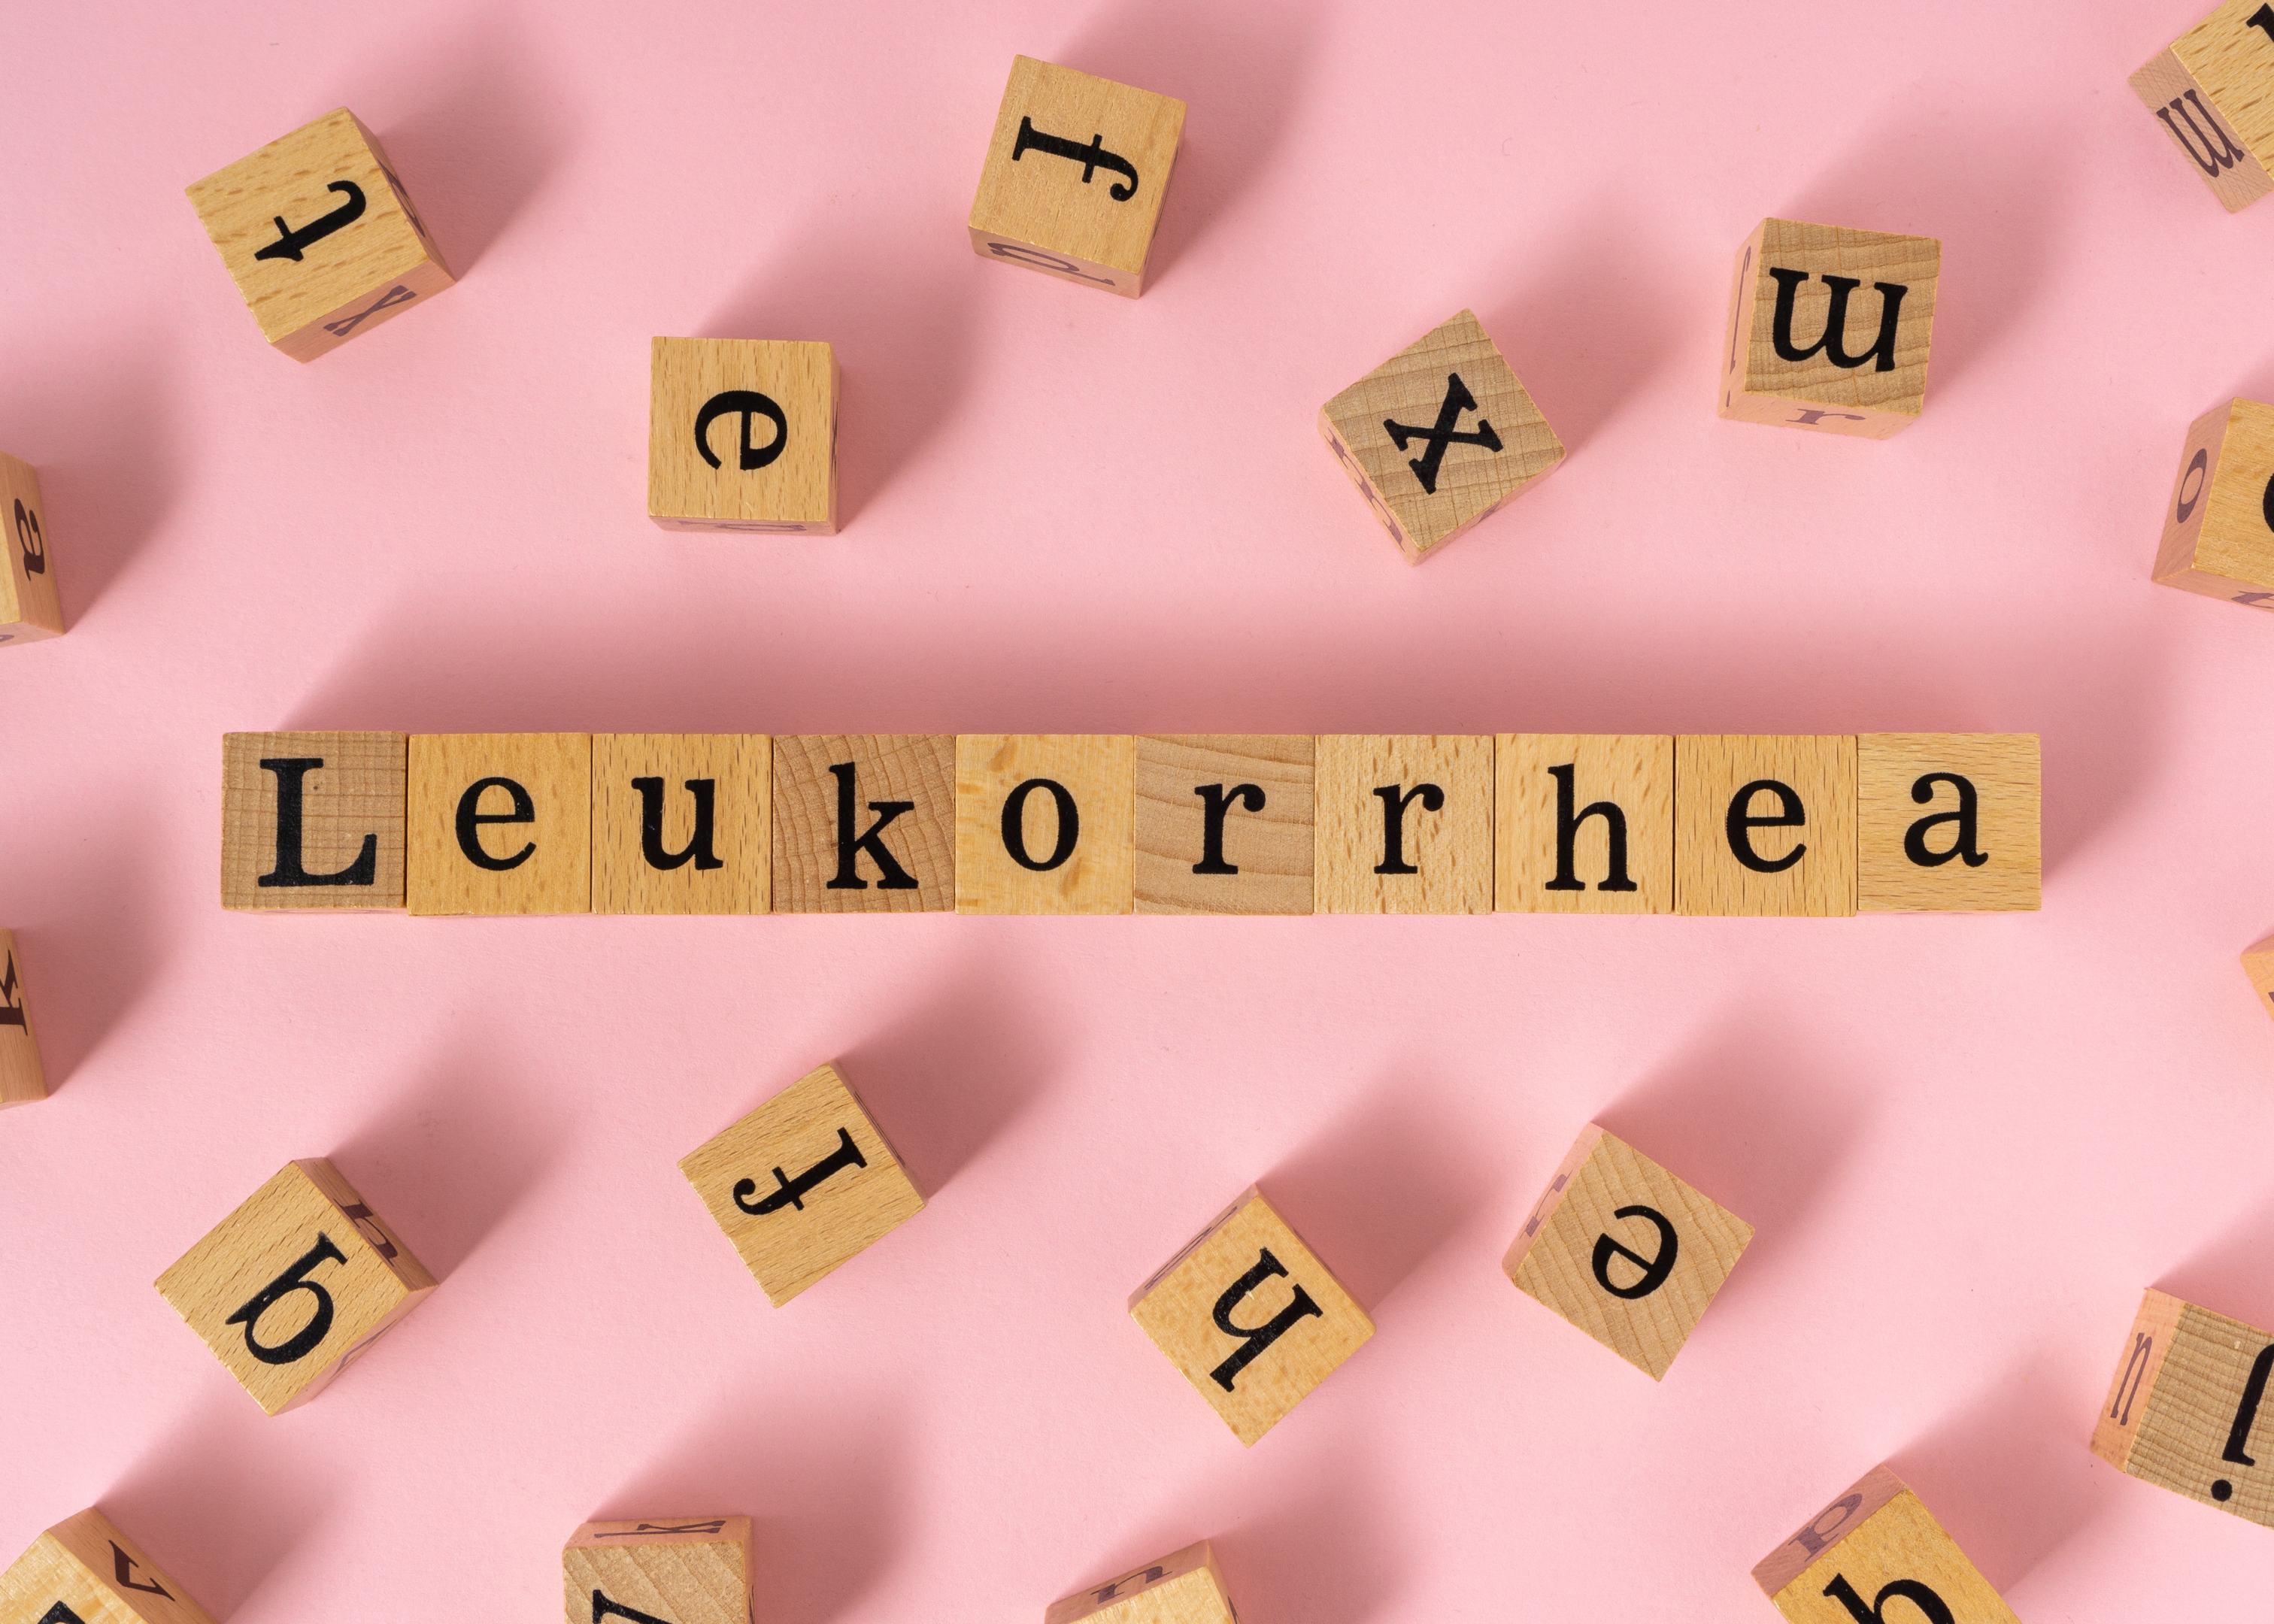 Leukorrhea is a common vaginal discharge.